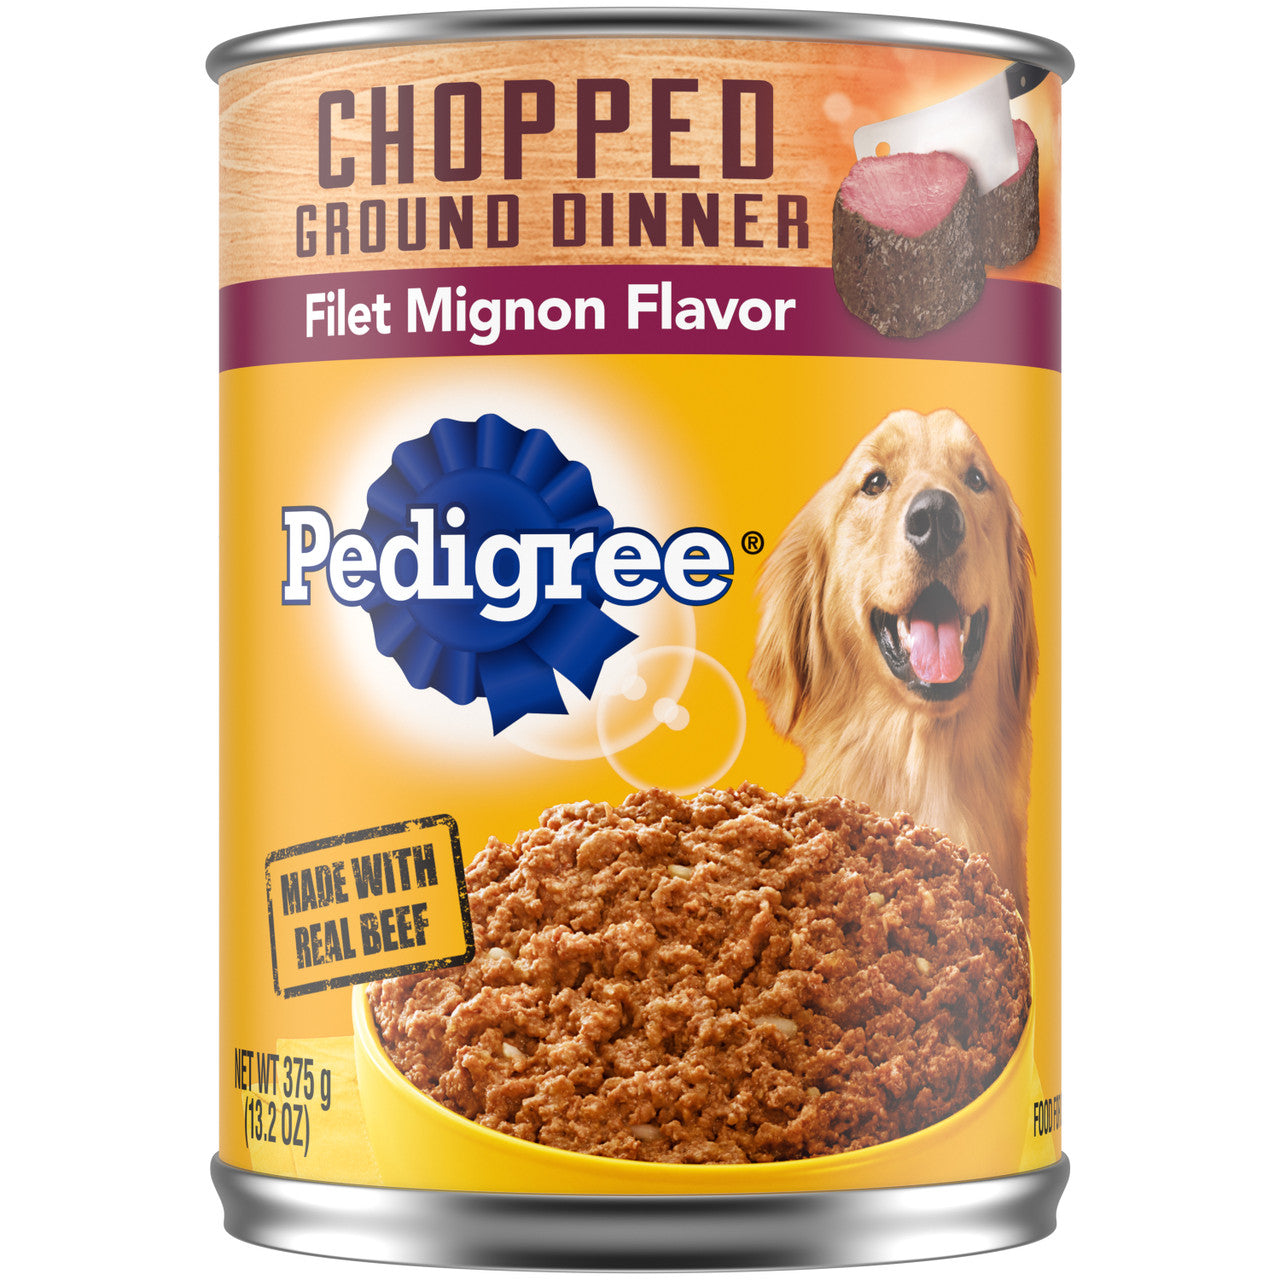 Pedigree Chopped Ground Dinner Adult Wet Dog Food Filet Mignon 13.2oz 12pk